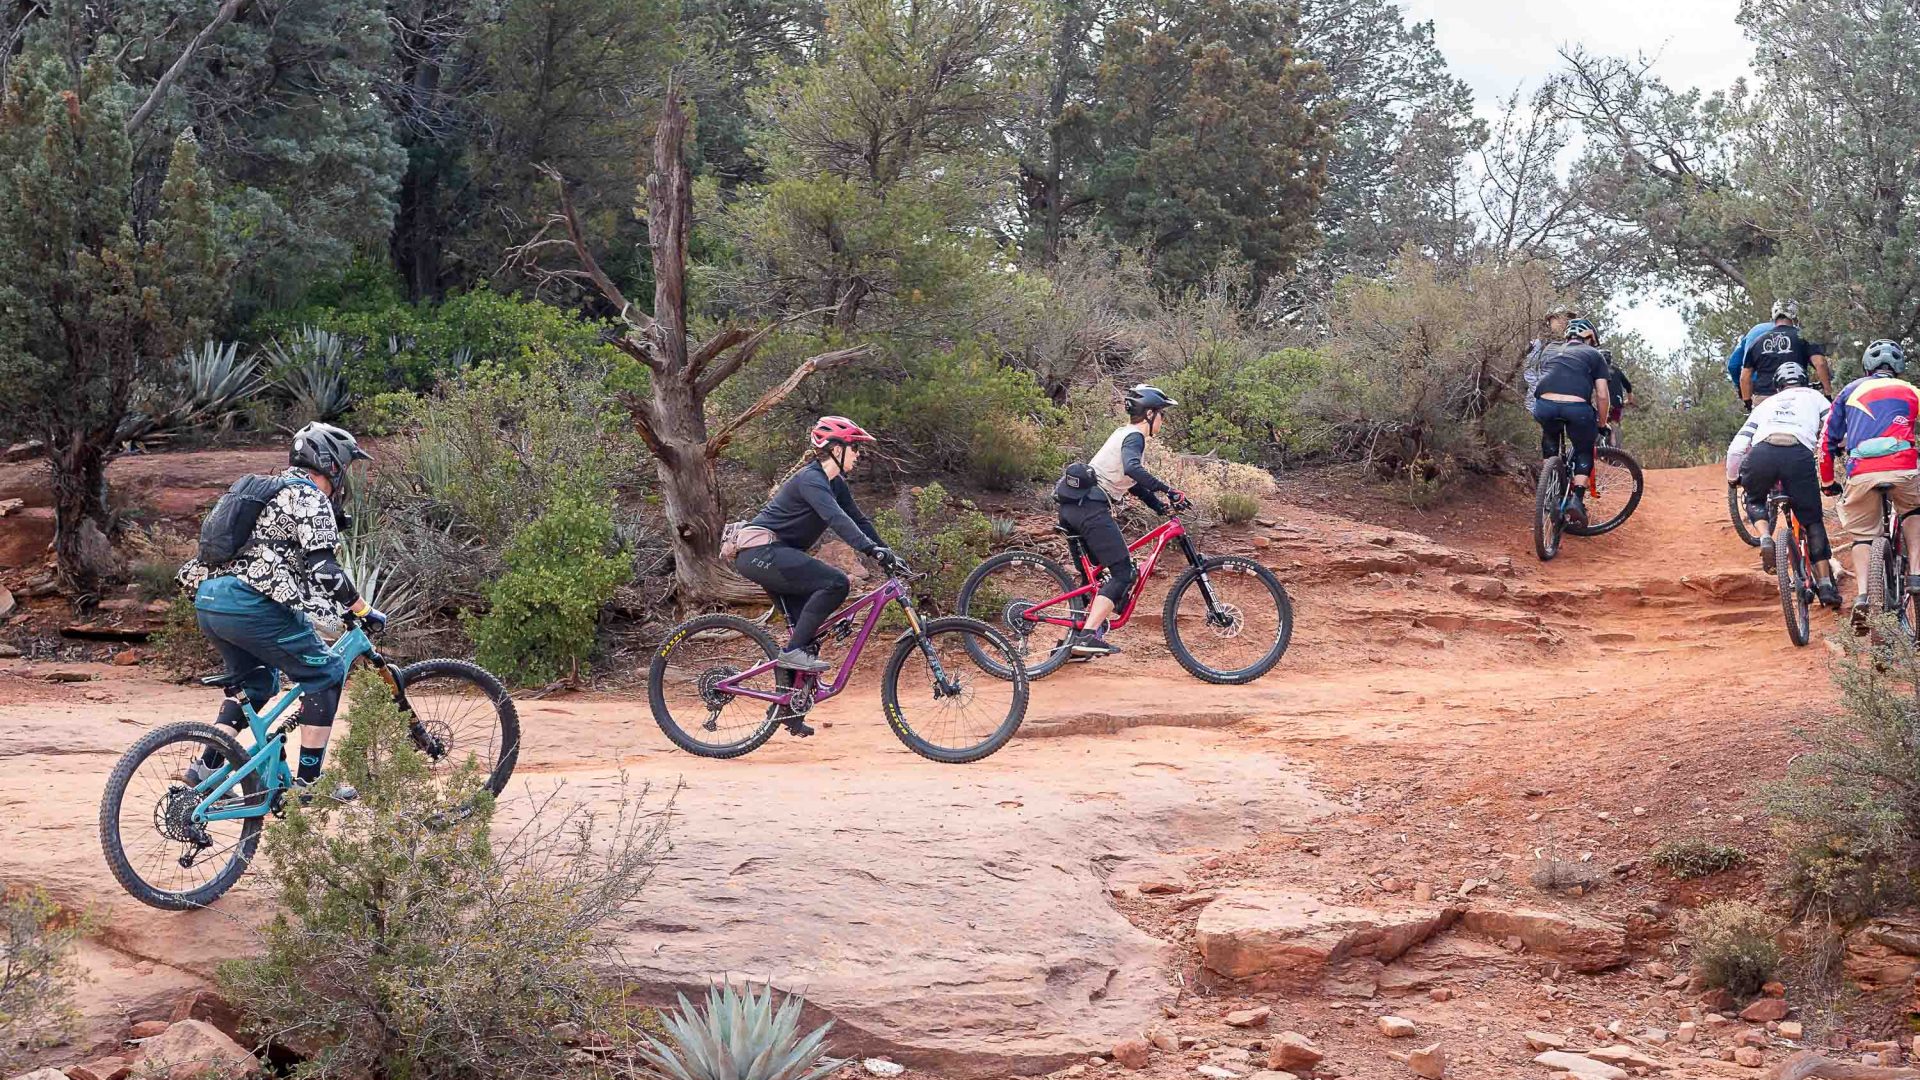 Mountain bikers ride in single file along a dirt trail.